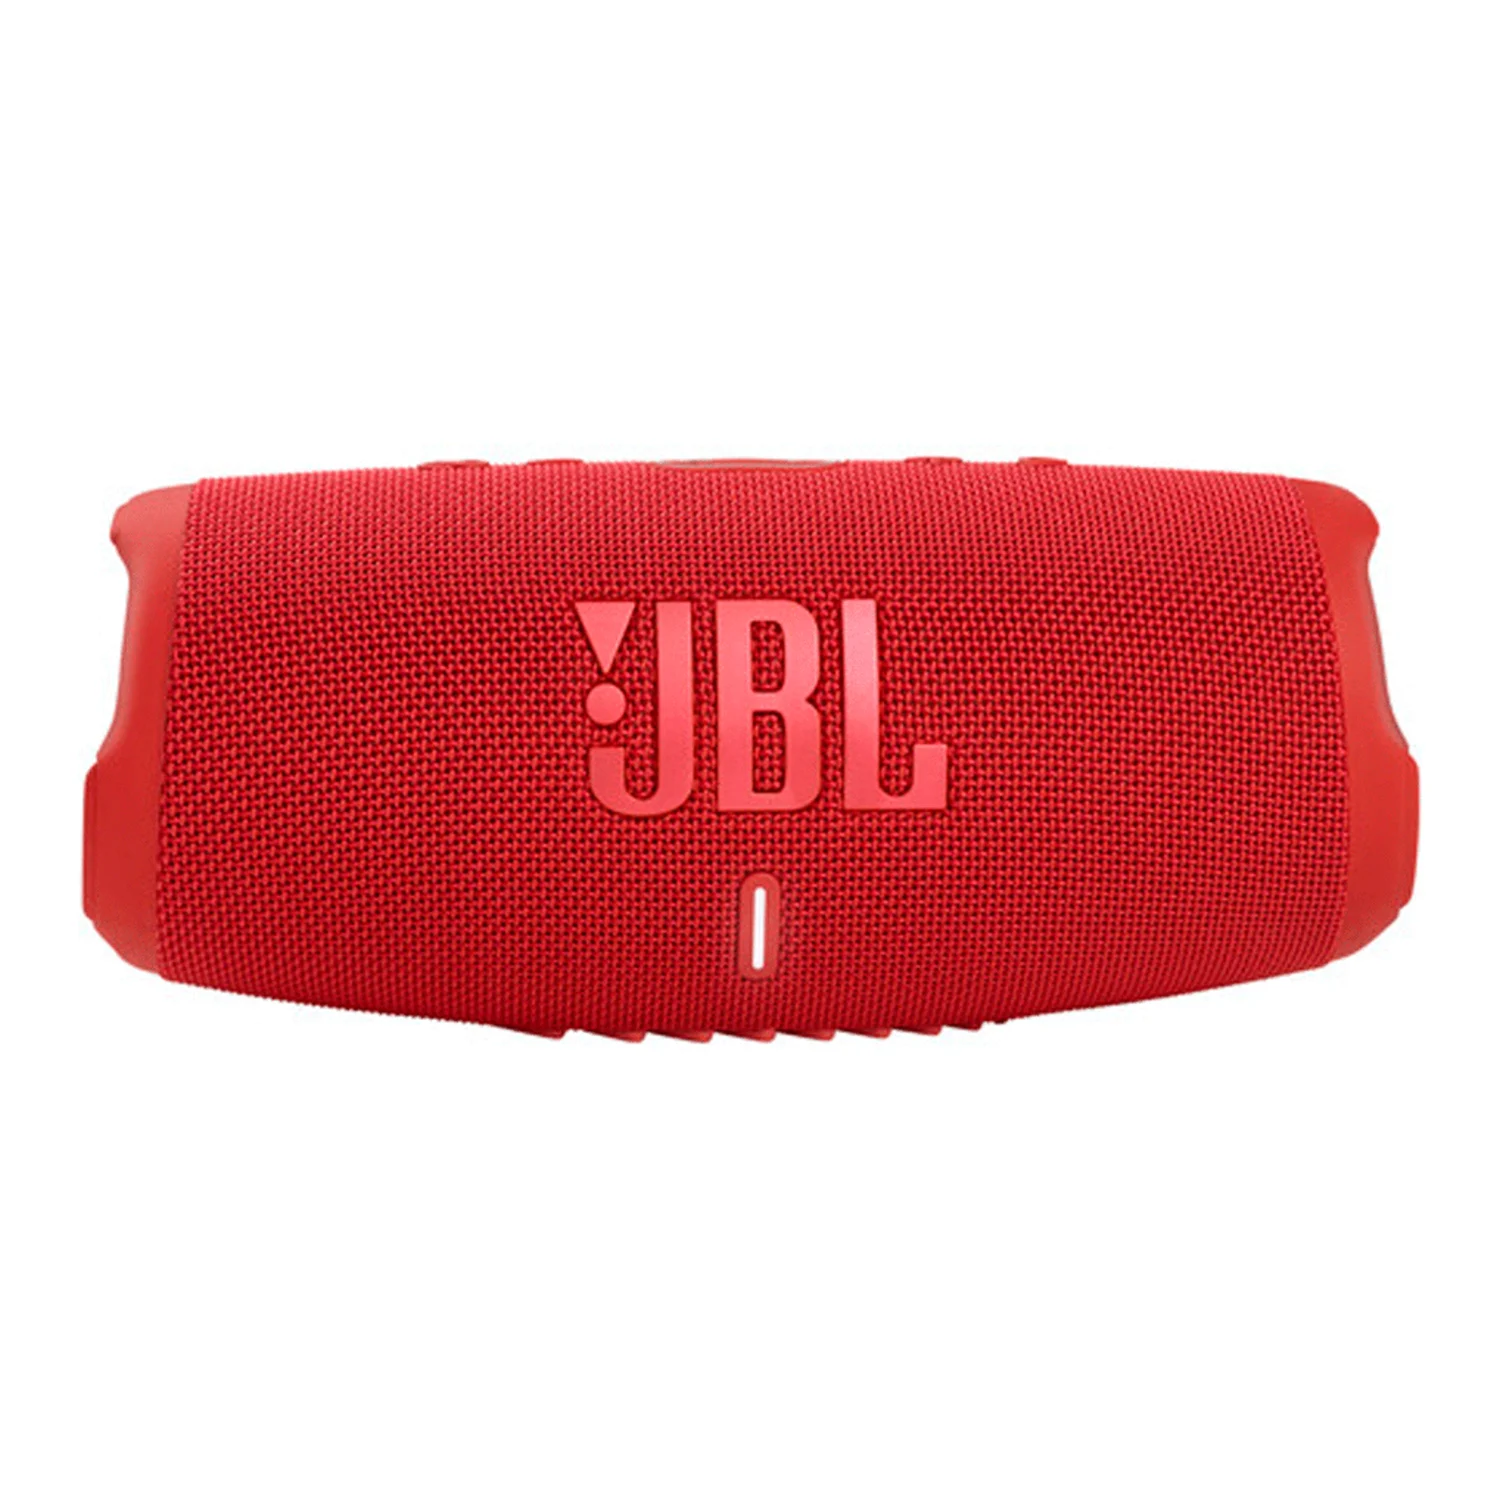 Caixa de Som JBL Charge 5 - Red